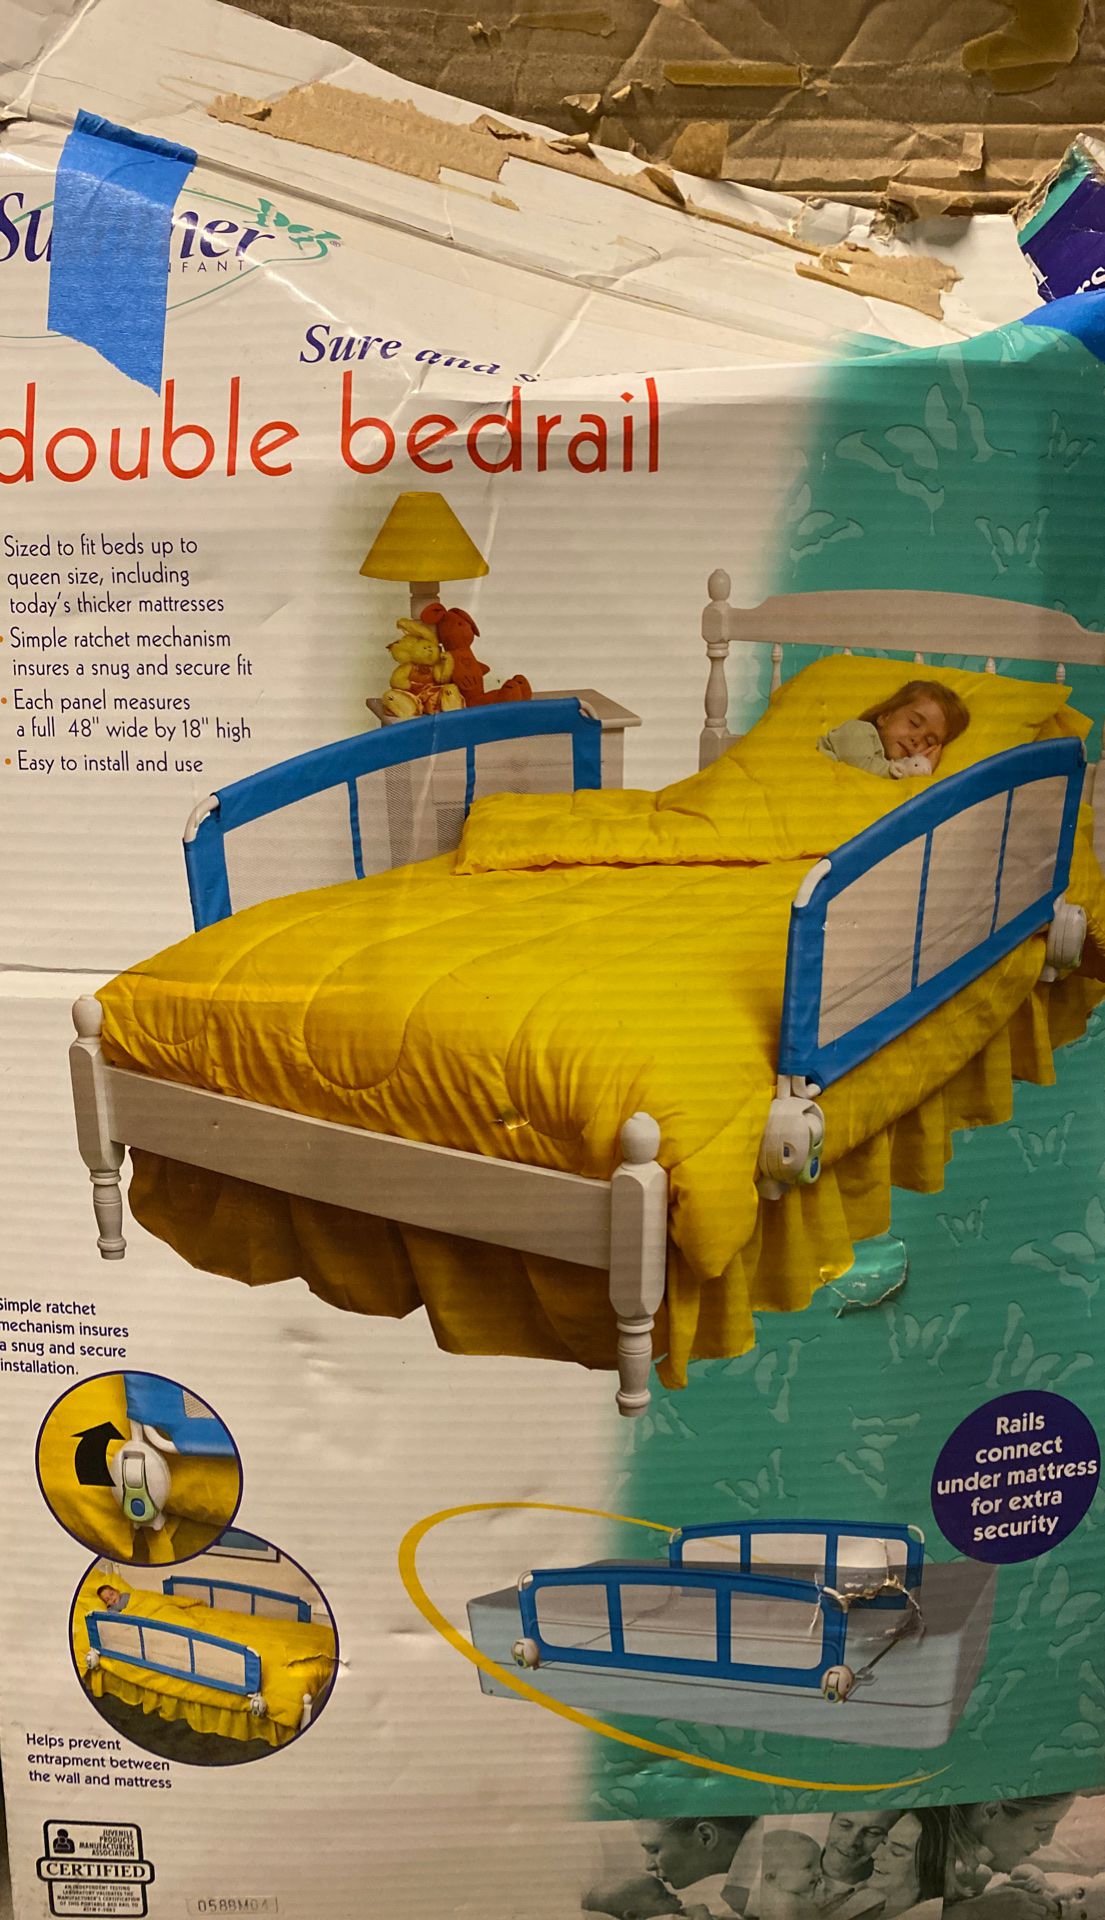 FREE Double bed rail - READ FULL DESCRIPTION